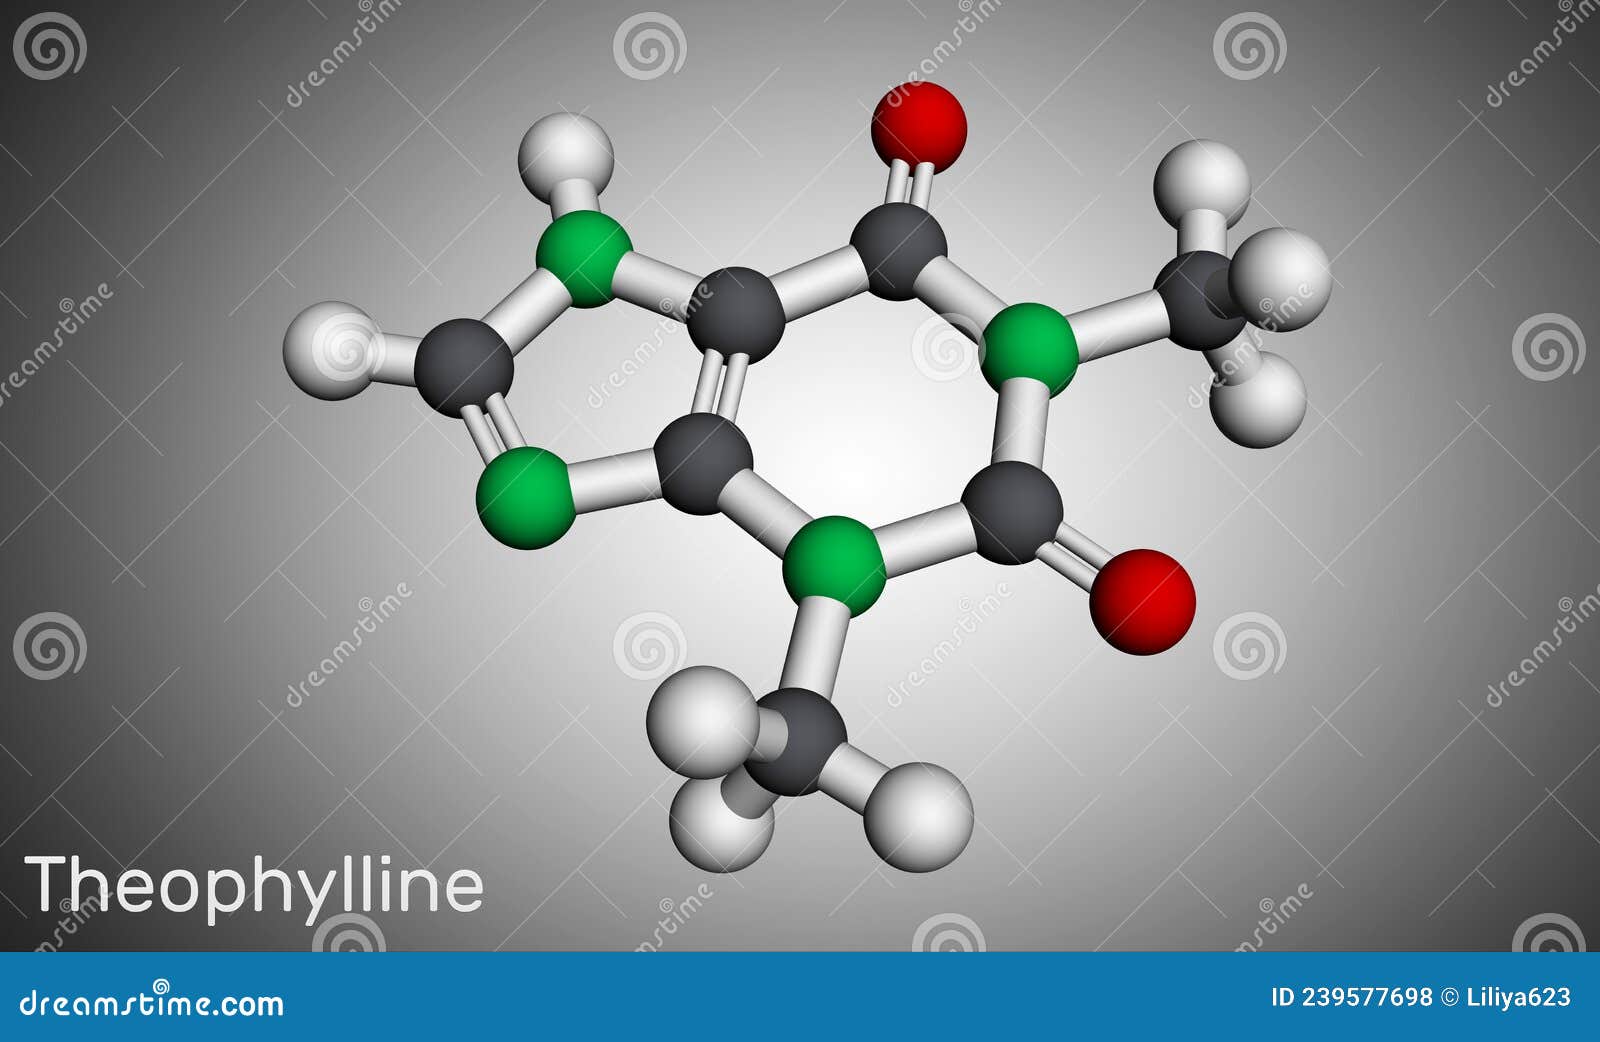 theophylline or 1,3-dimethylxanthine molecule. it is dimethylxanthine, xanthine derivative. vasodilator, bronchodilator, asthmatic